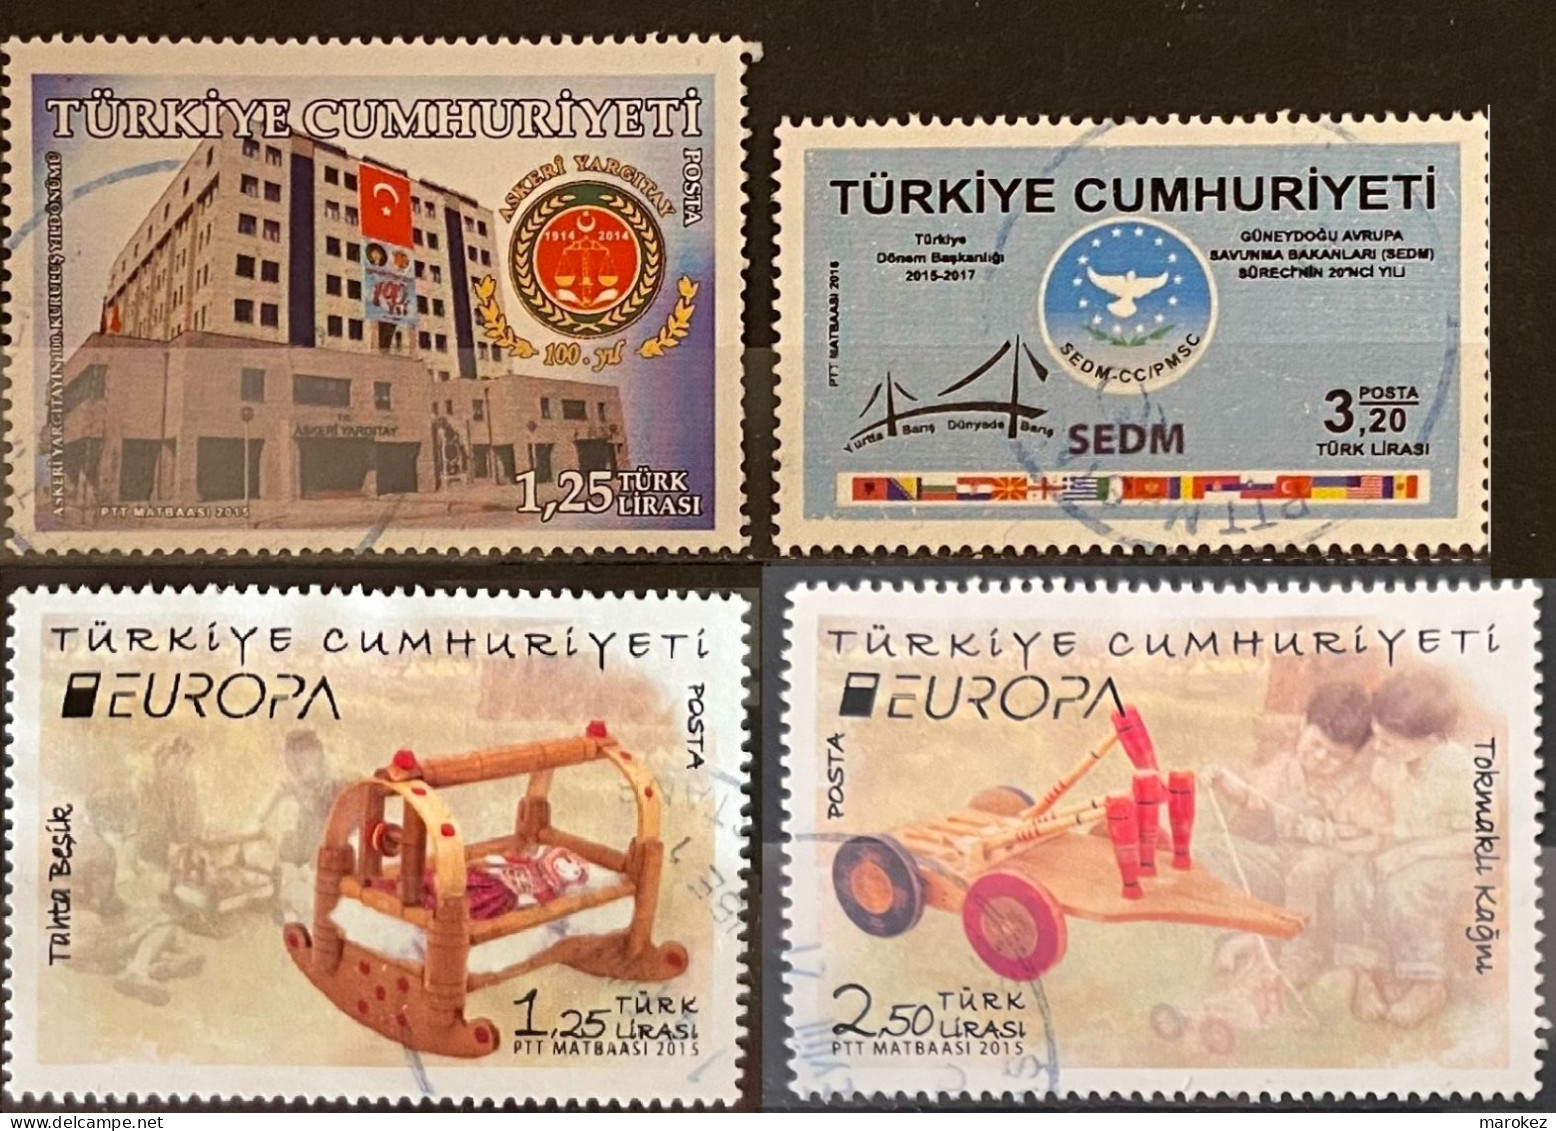 TURKEY 2015-2016 Institutions, Europa & Associations 4 Postally Used Stamps MICHEL # 4166,4176,4177,4307 - Gebruikt